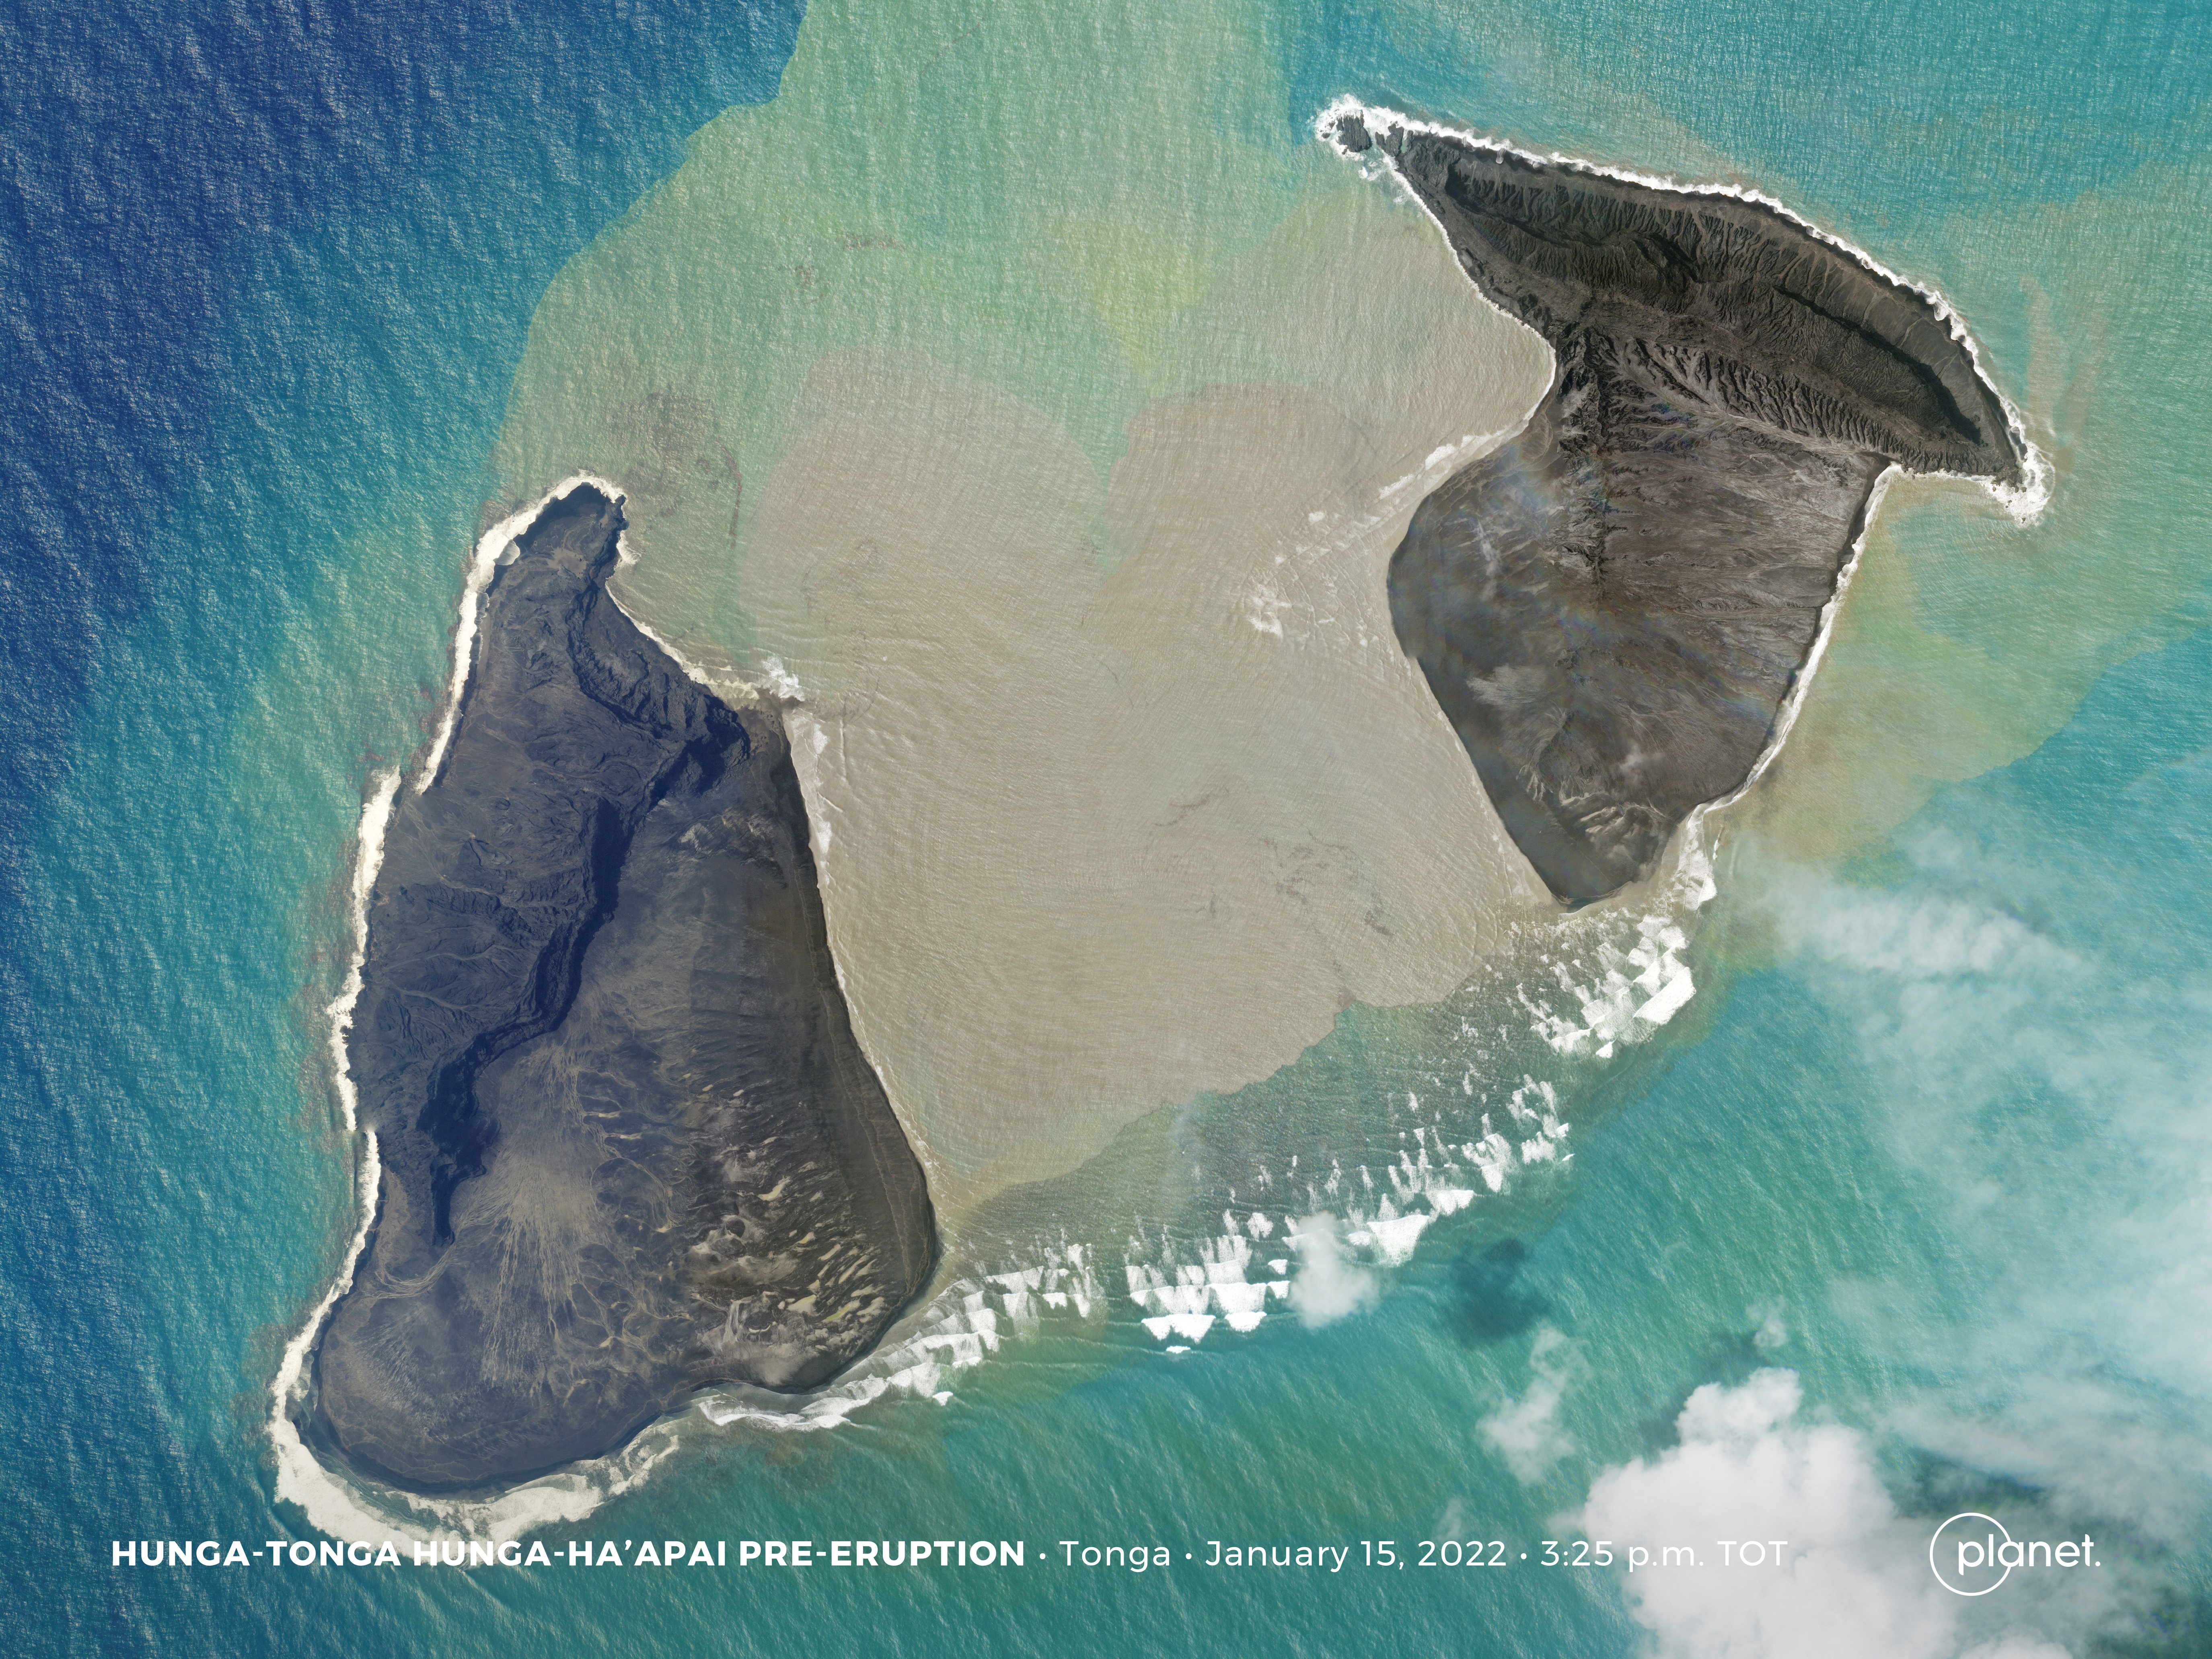 A Planet SkySat image shows the underwater volcano Hunga Tonga-Hunga Ha'apai two hours before its eruption